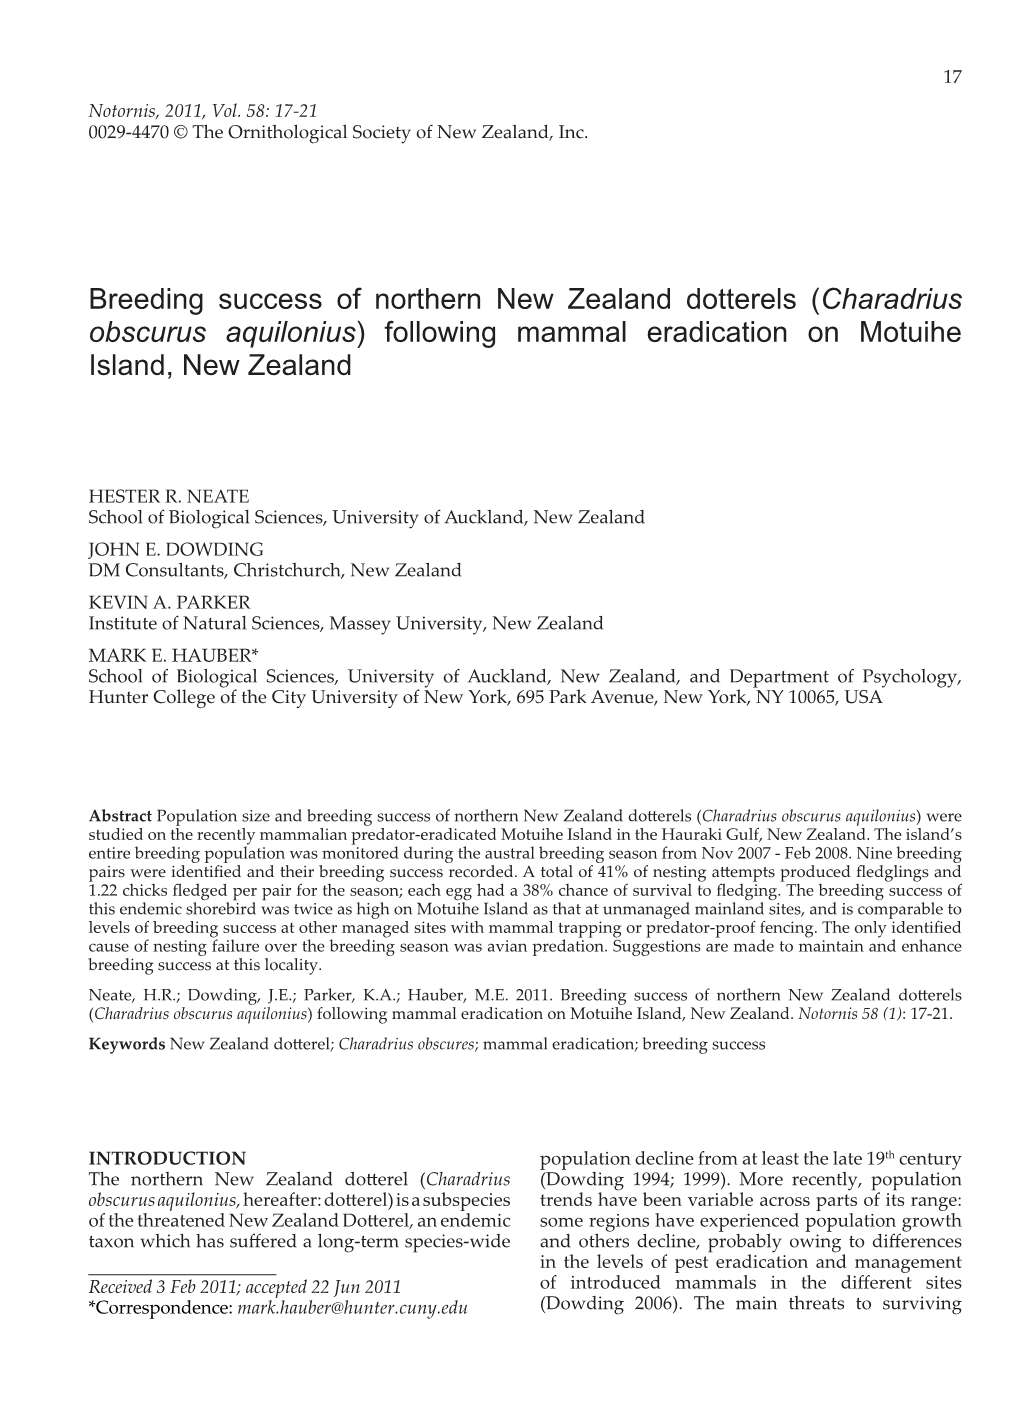 Breeding Success of Northern New Zealand Dotterels (Charadrius Obscurus Aquilonius) Following Mammal Eradication on Motuihe Island, New Zealand